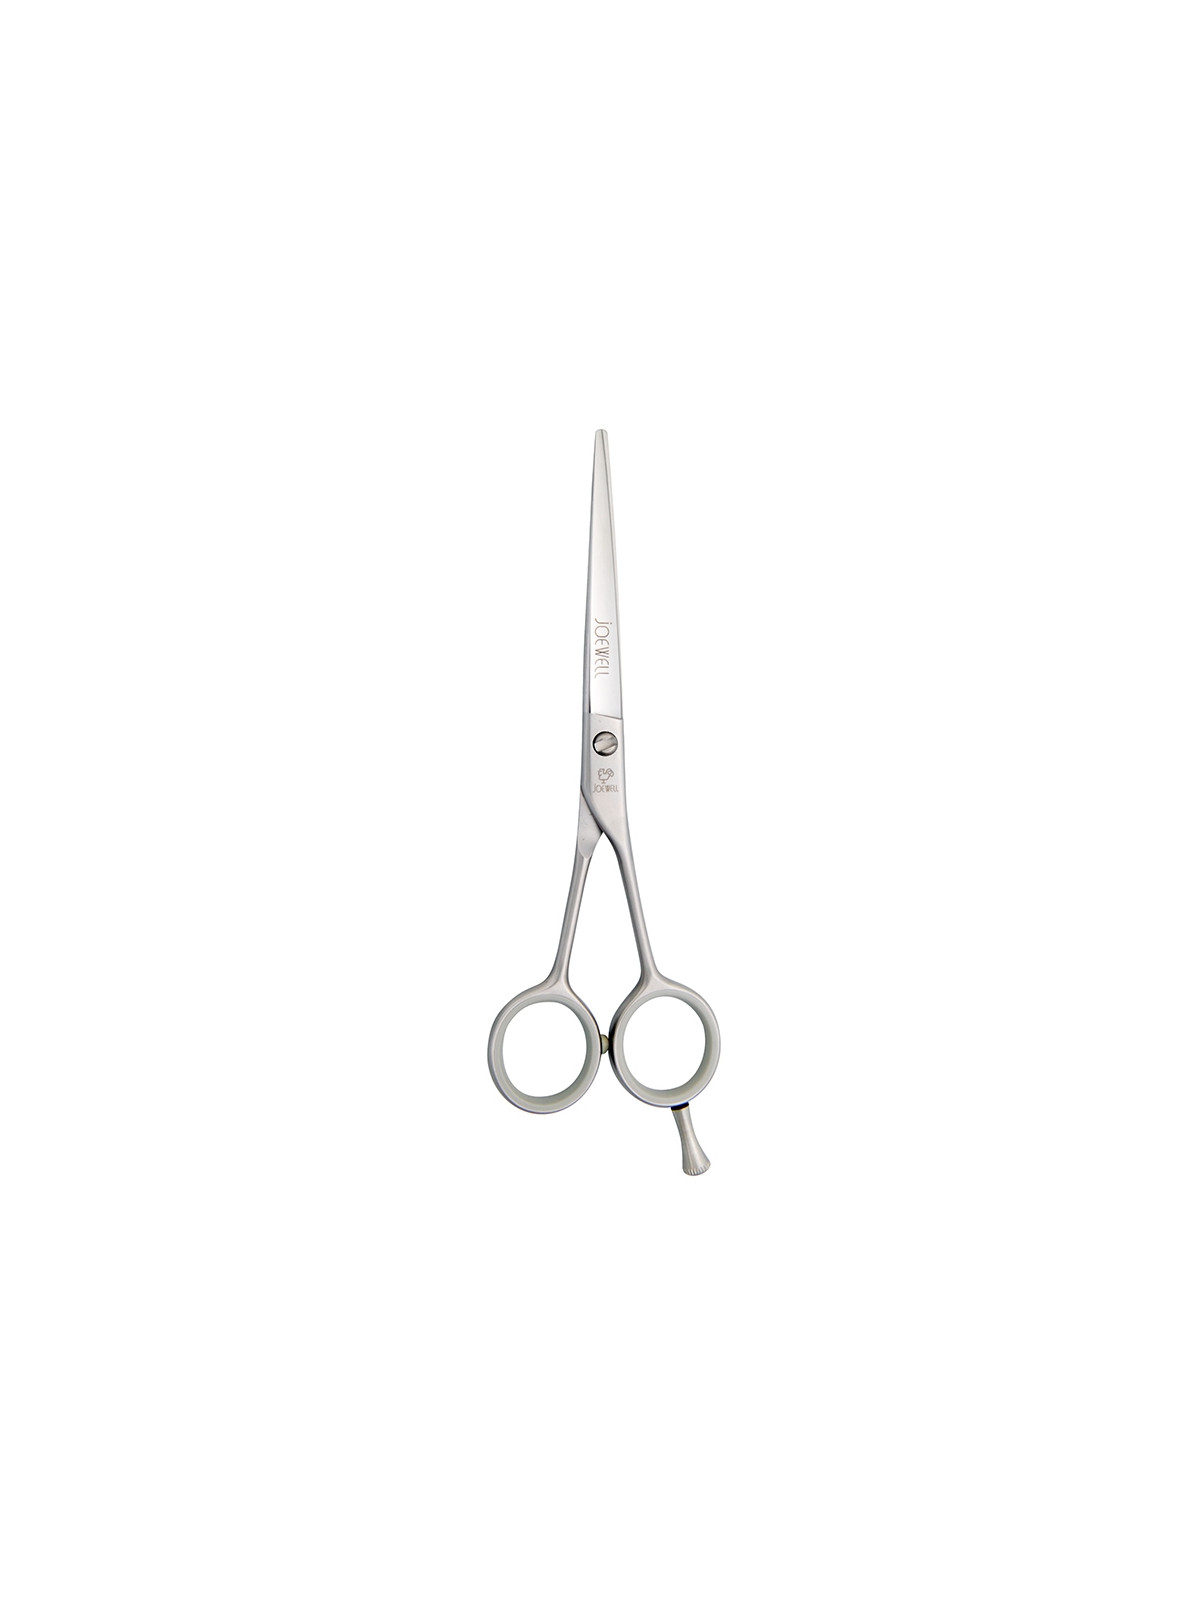 Joewell Classic Pro cutting scissors